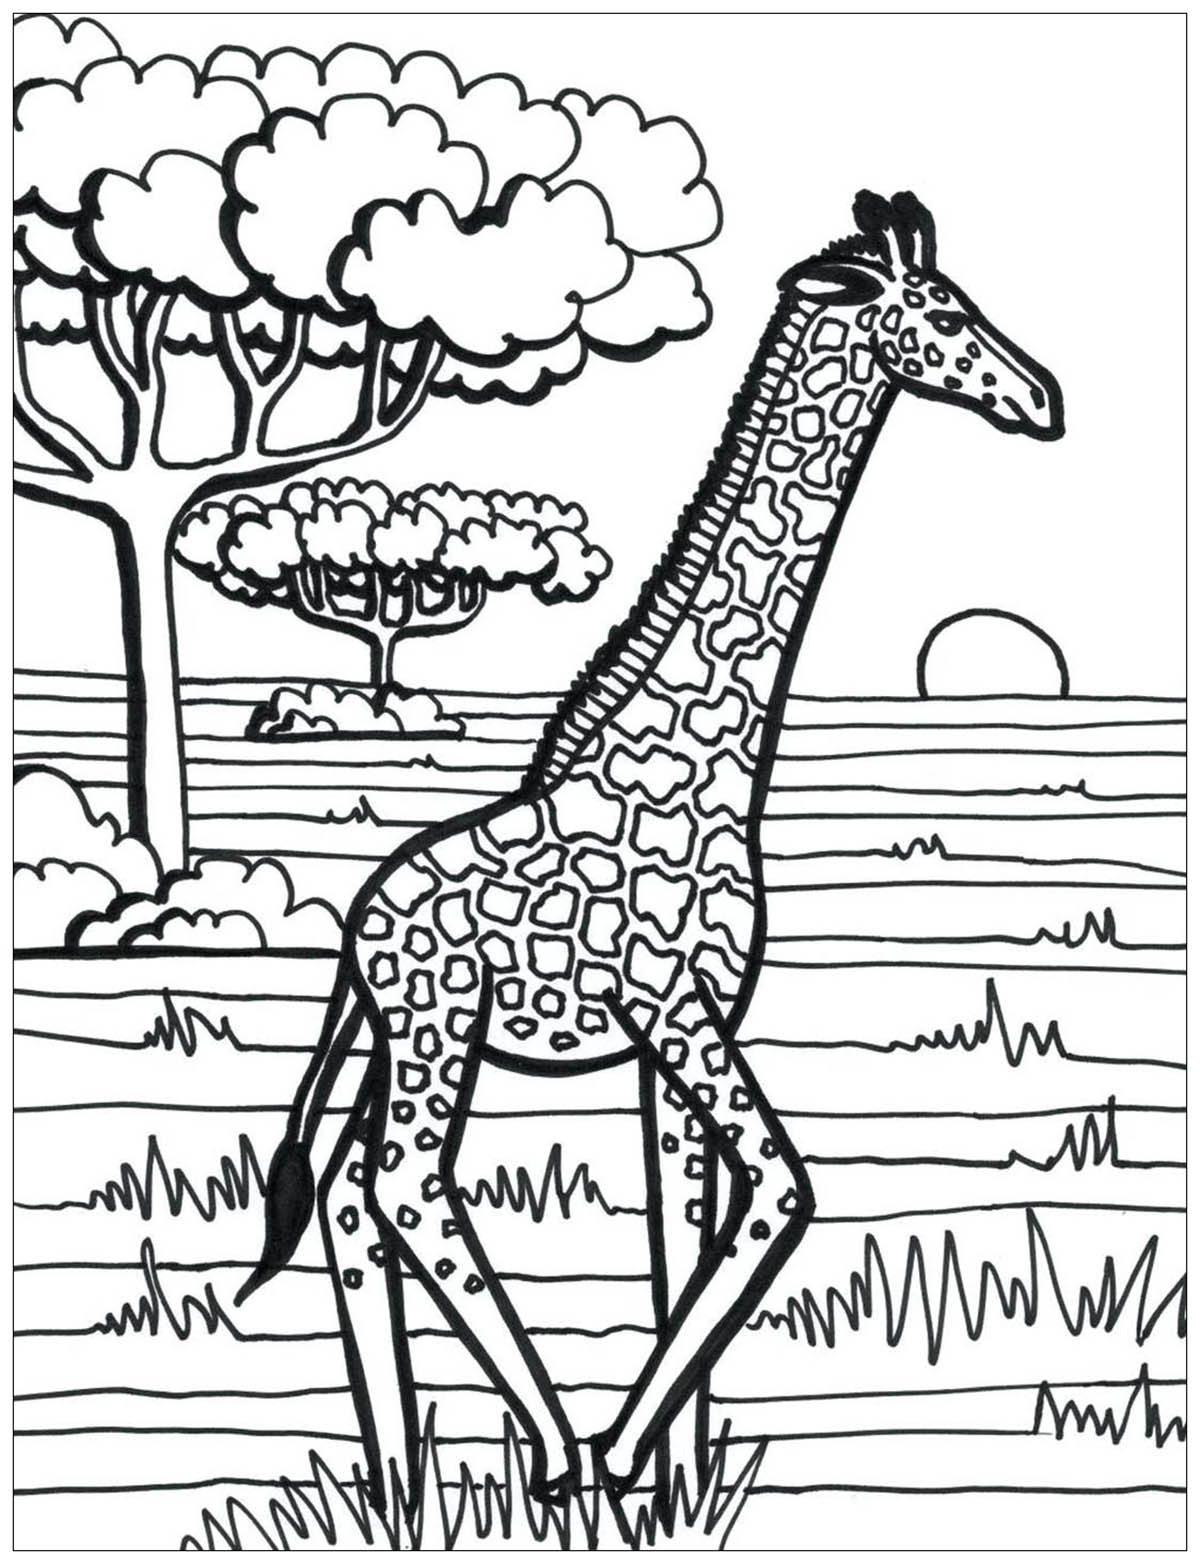 En medio de la sabana, ¡esta jirafa corre!